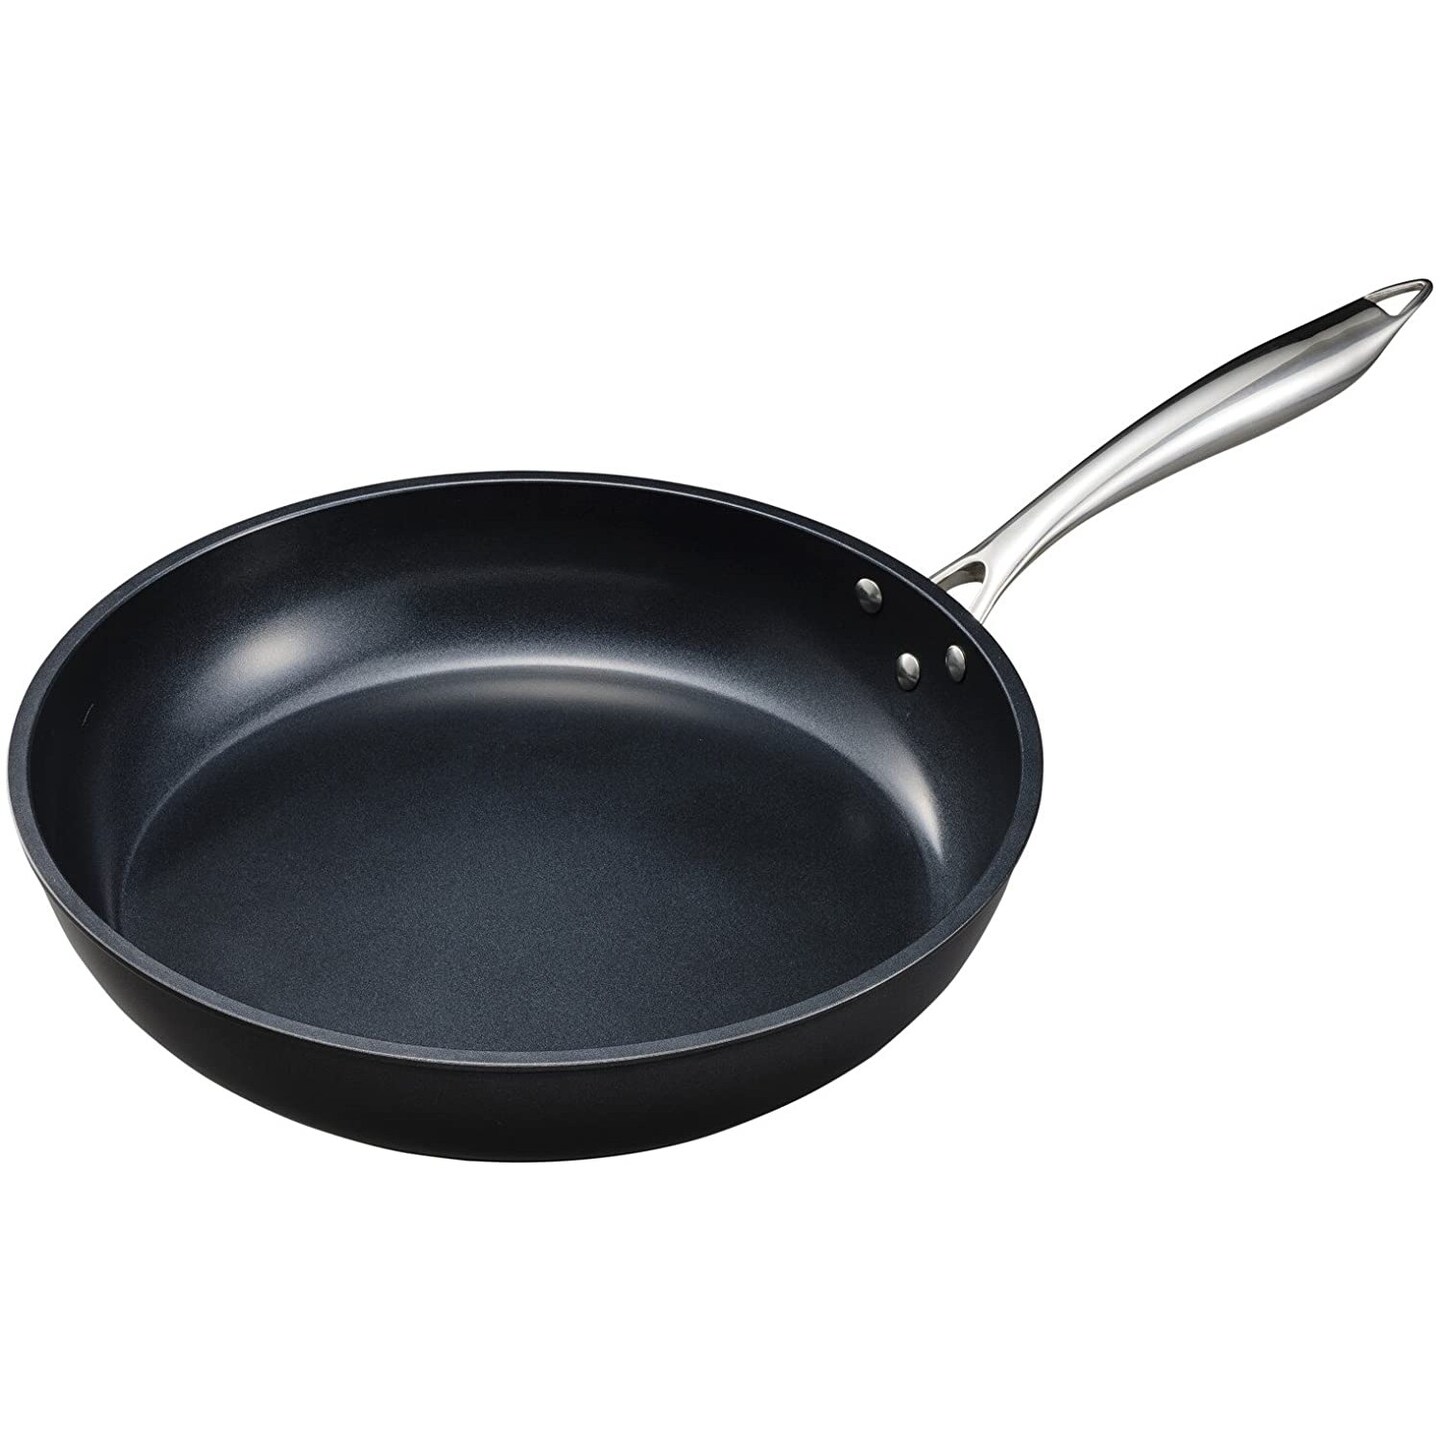 Kyocera Ceramic Nonstick Fry Pan, 12 inch, Black Ceramic Coated Skillet